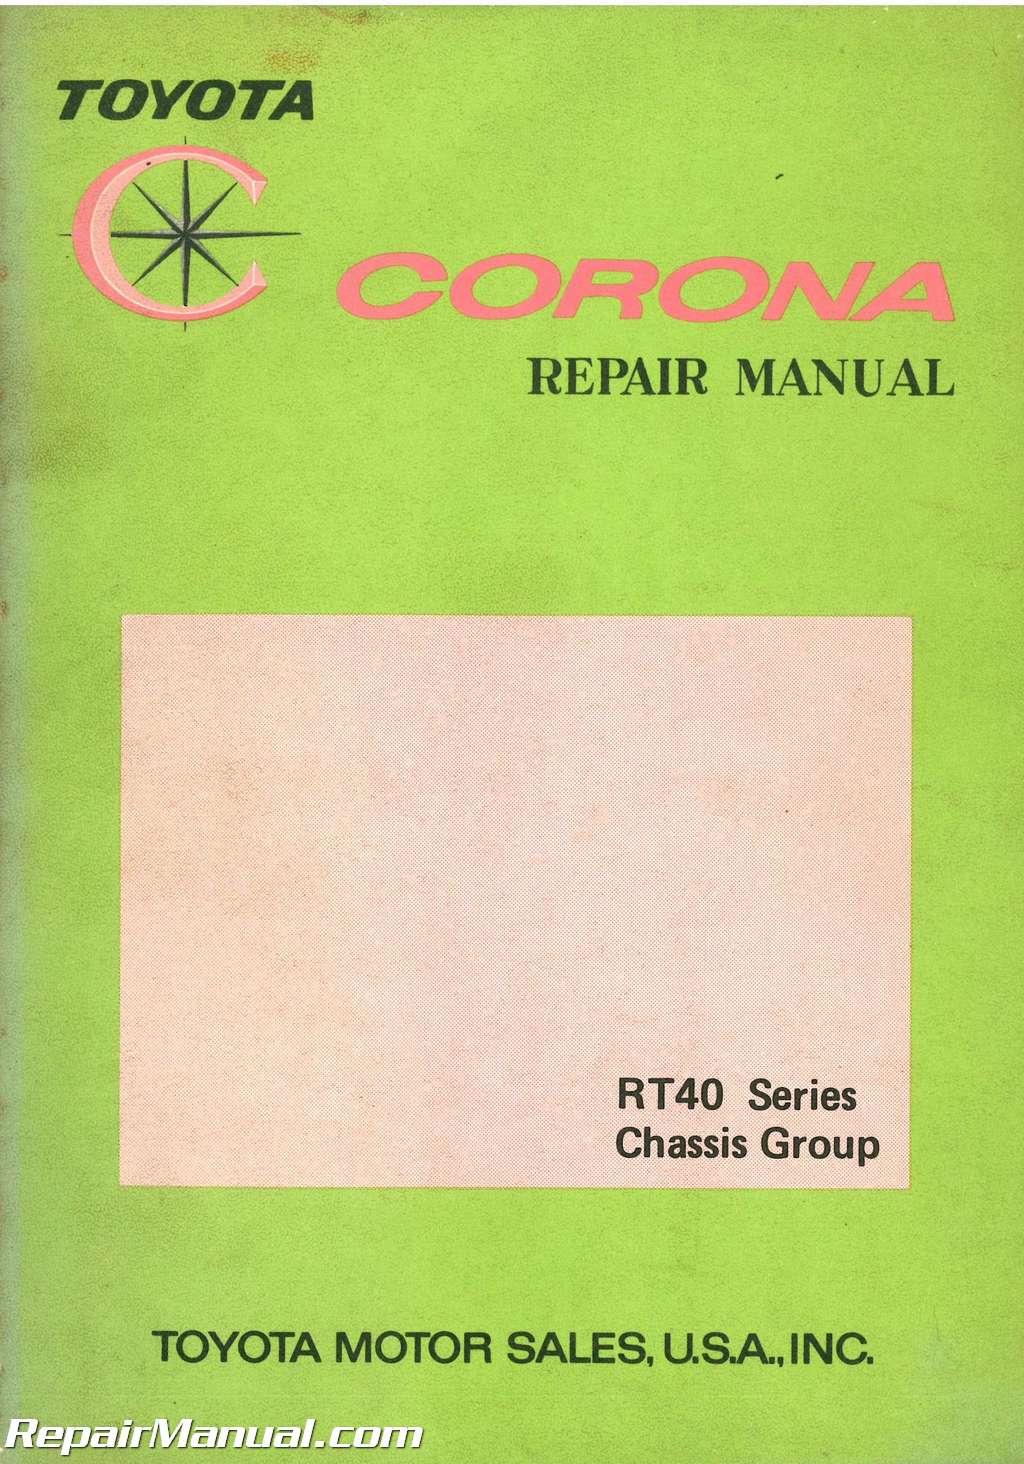 1970 Toyota Corolla Chassis Repair Manual Steering Suspension Brakes Shop